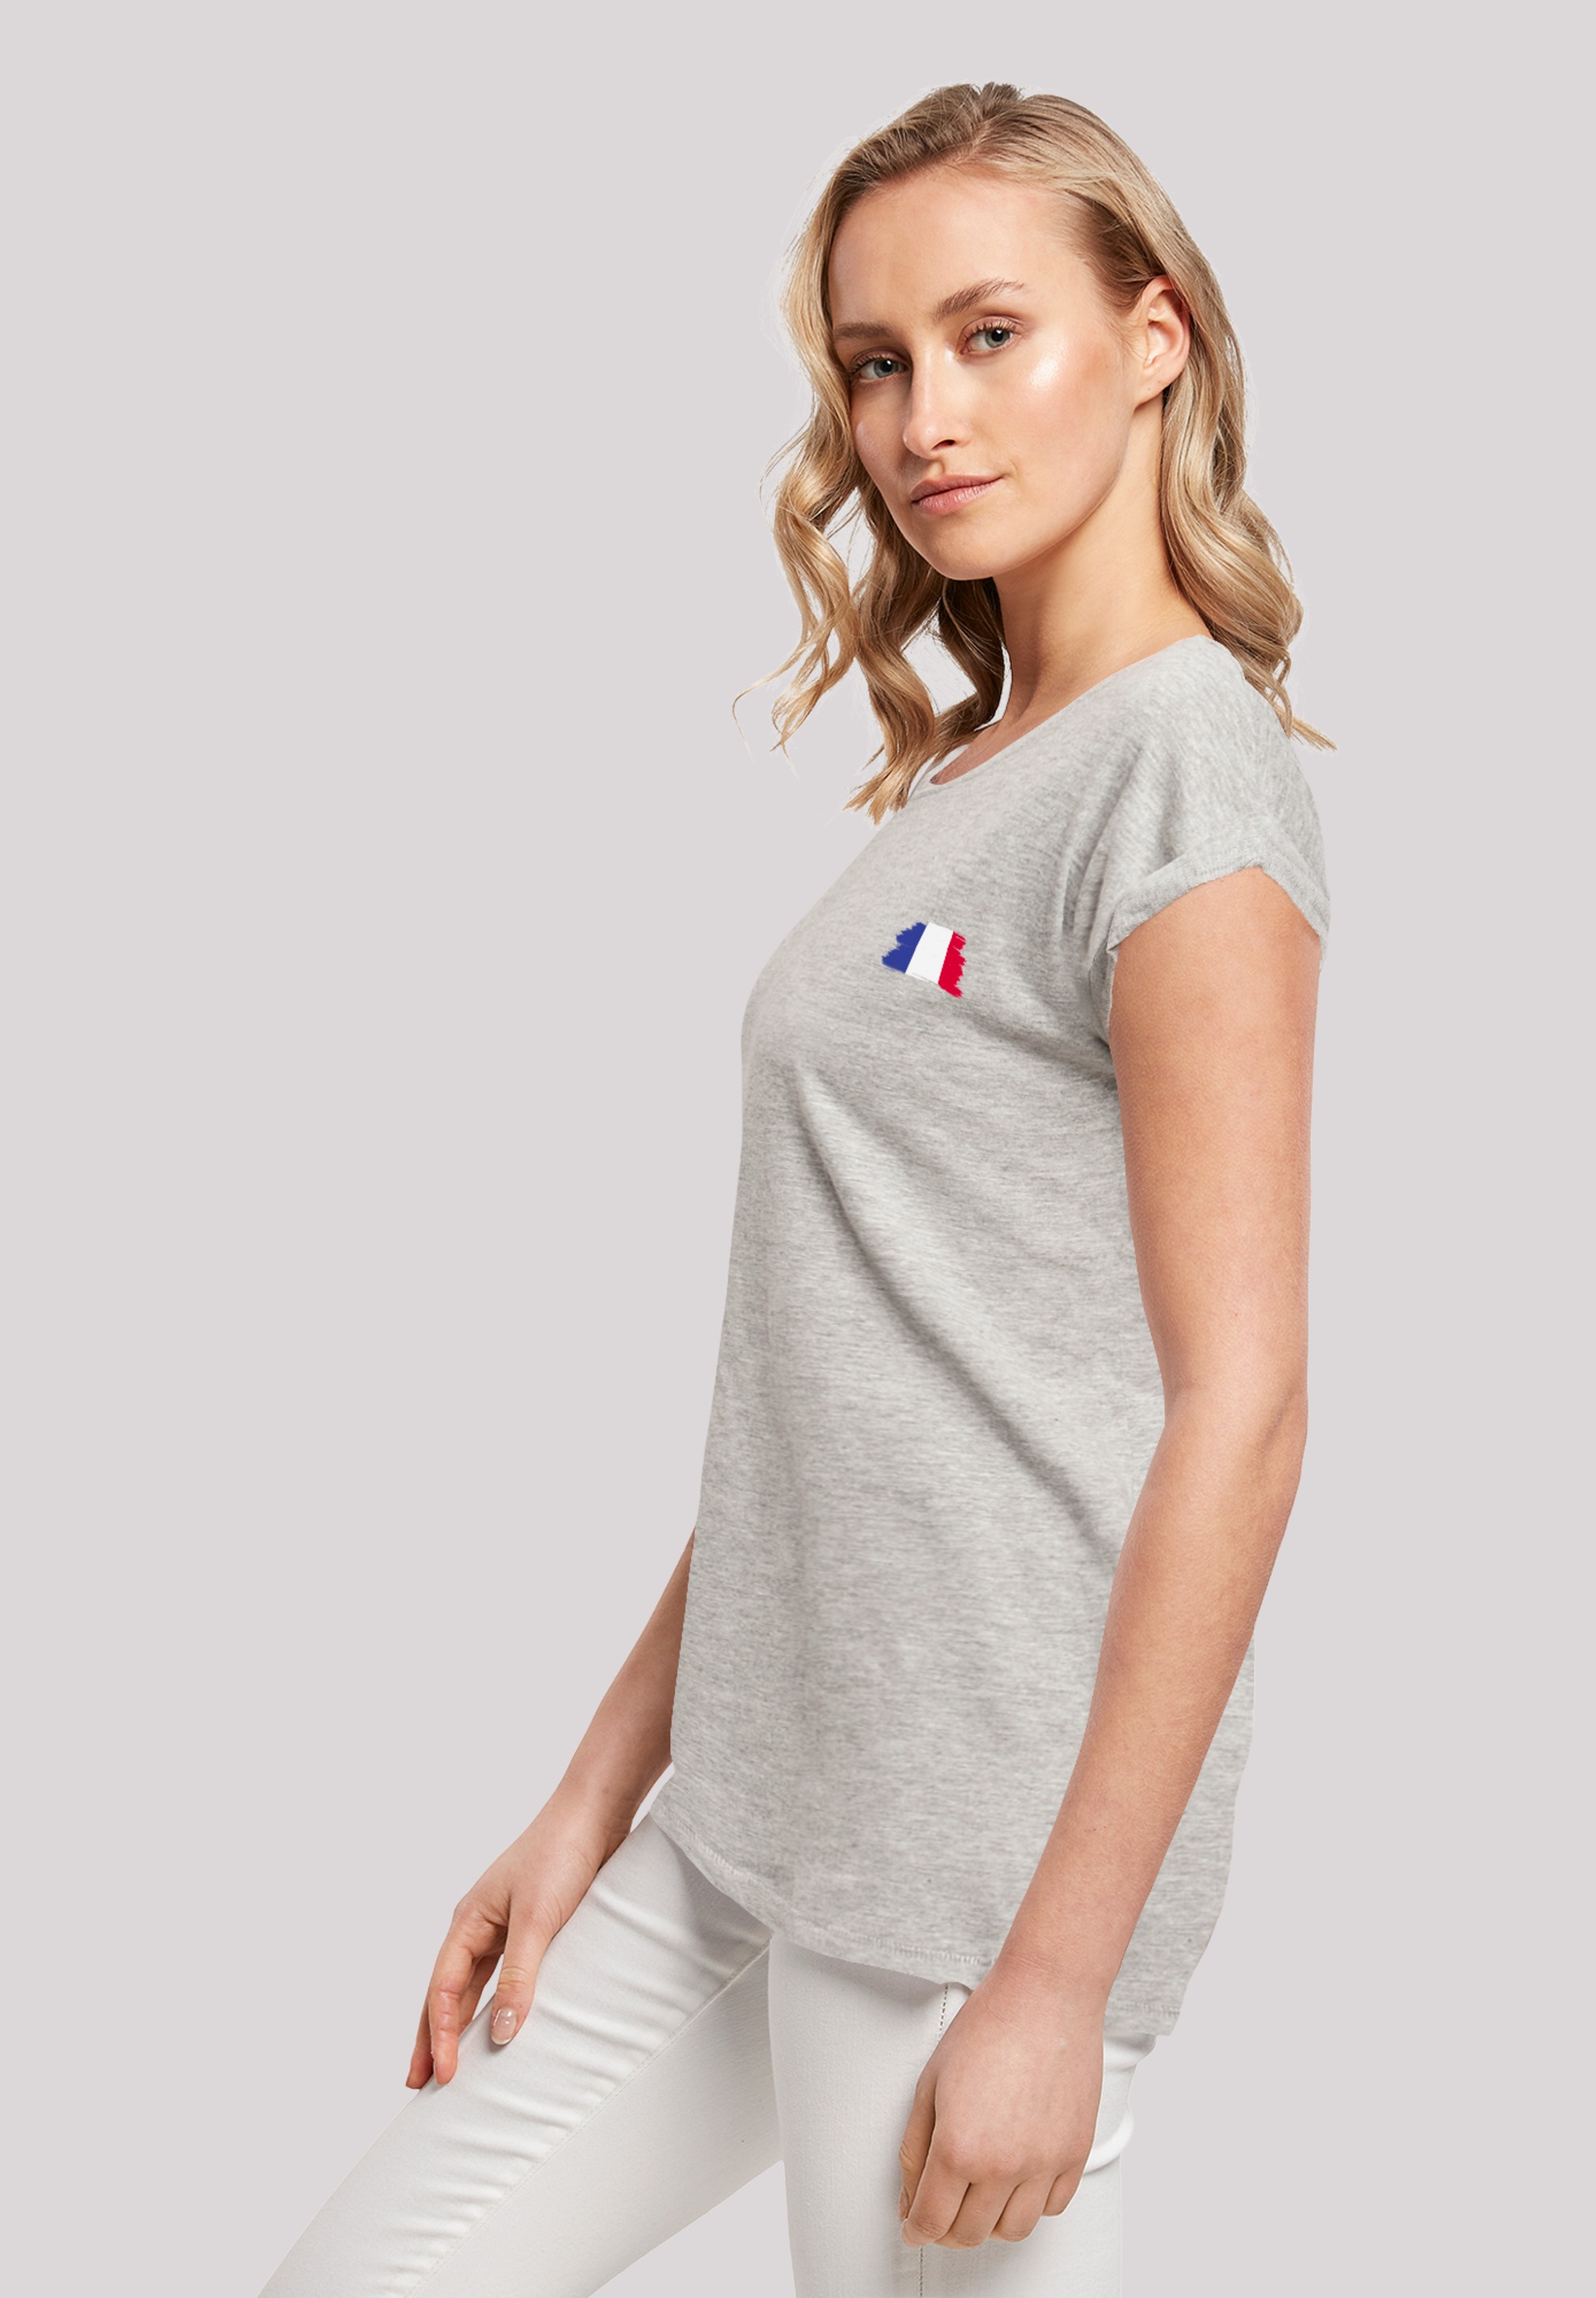 F4NT4STIC T-Shirt Frankreich I\'m Print kaufen | »France Fahne«, walking Flagge